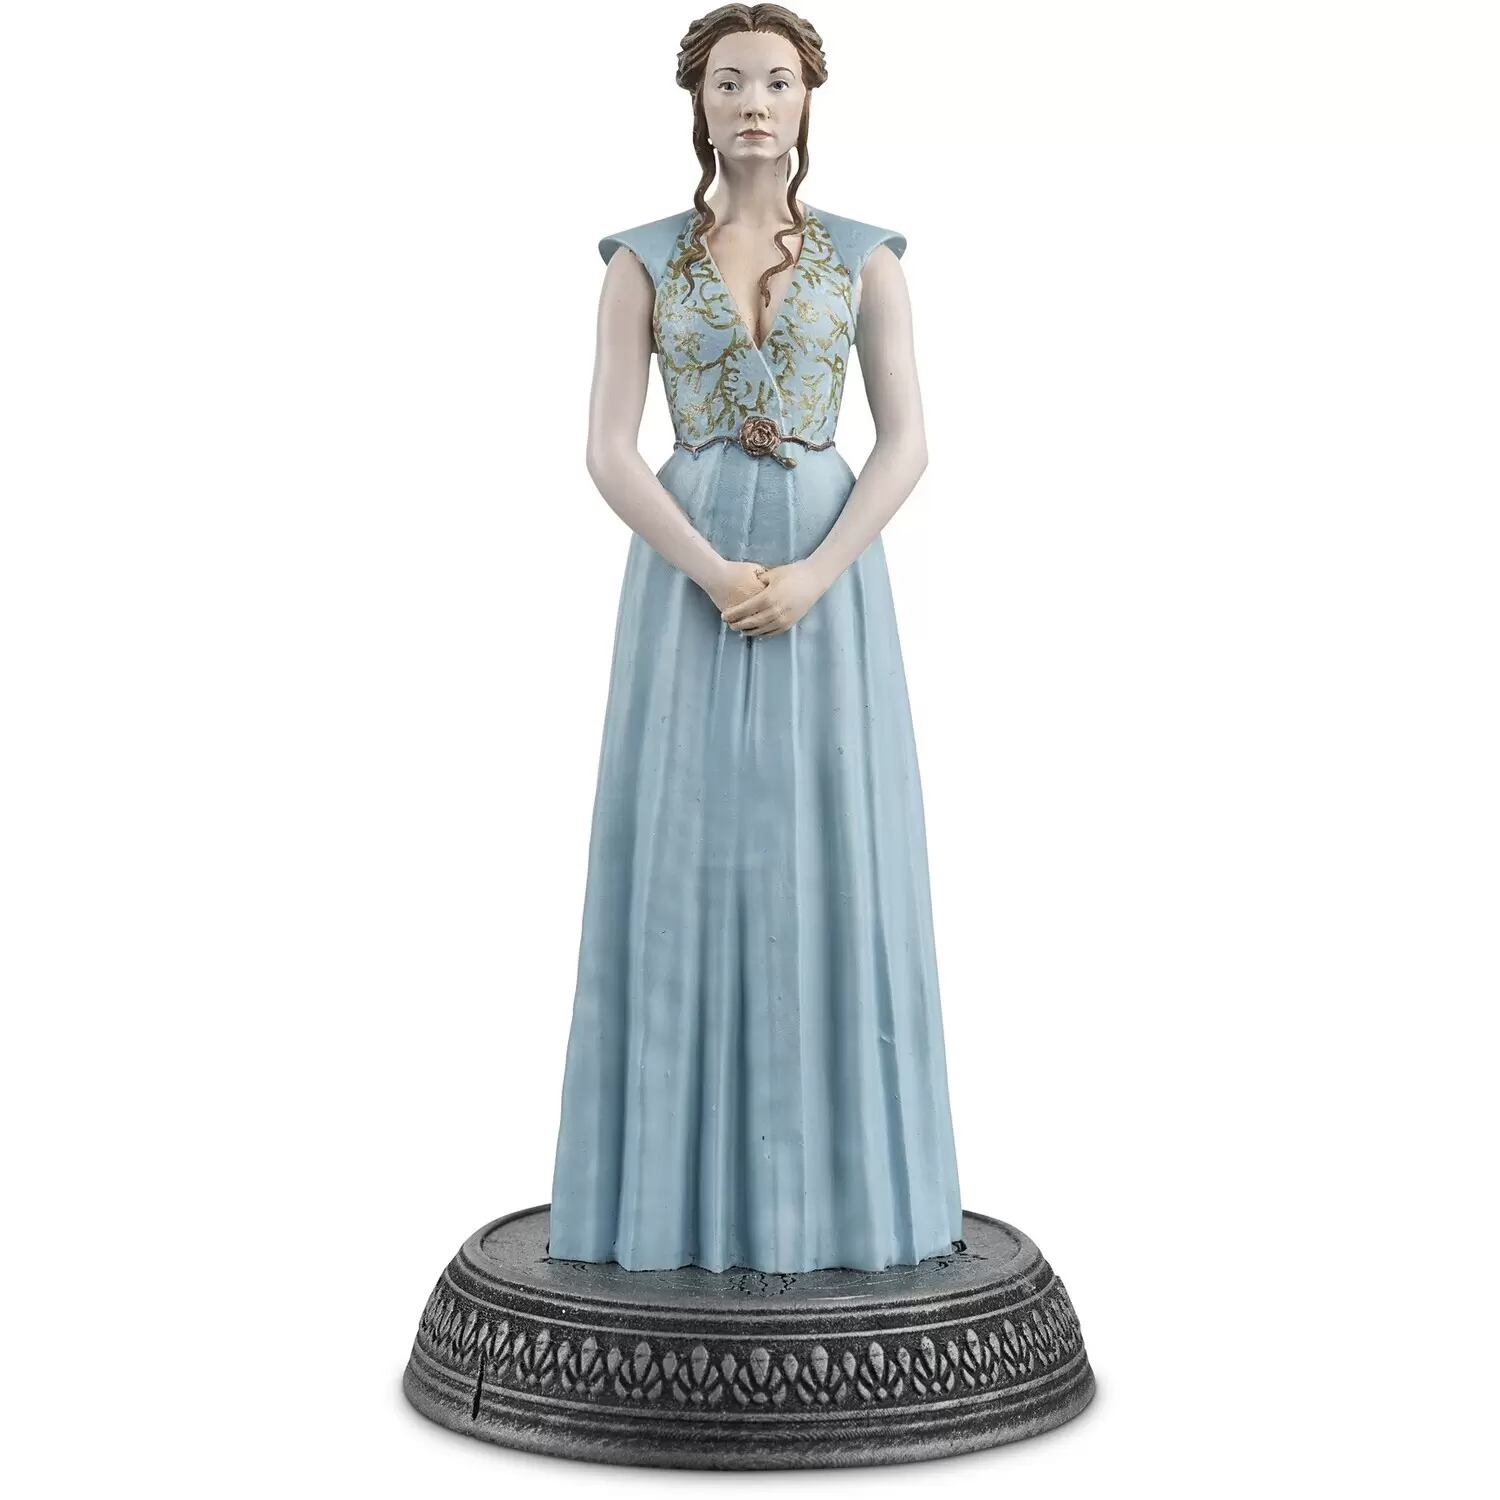 Game of Thrones - Margaery Tyrell - The Rose of Highgarden